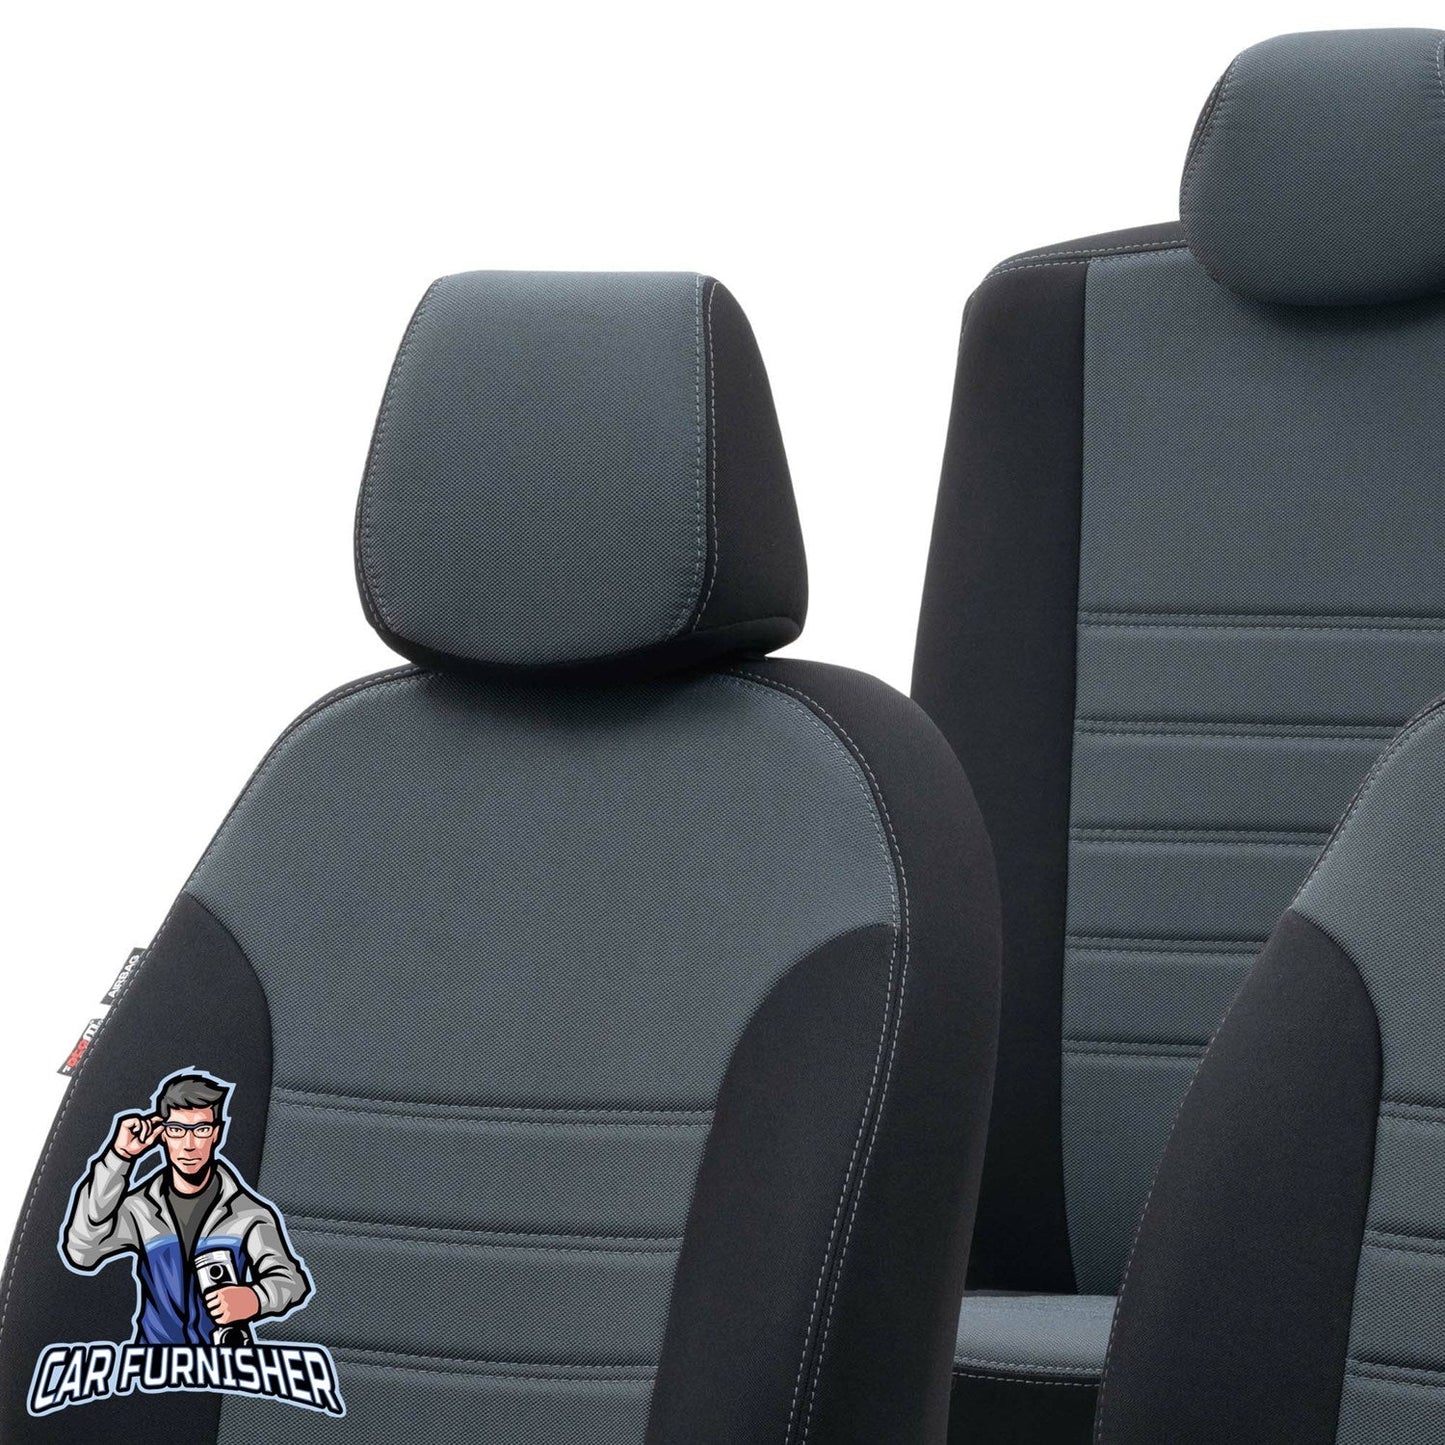 Landrover Freelander Car Seat Covers 1998-2012 Original Design Smoked Black Jacquard Fabric